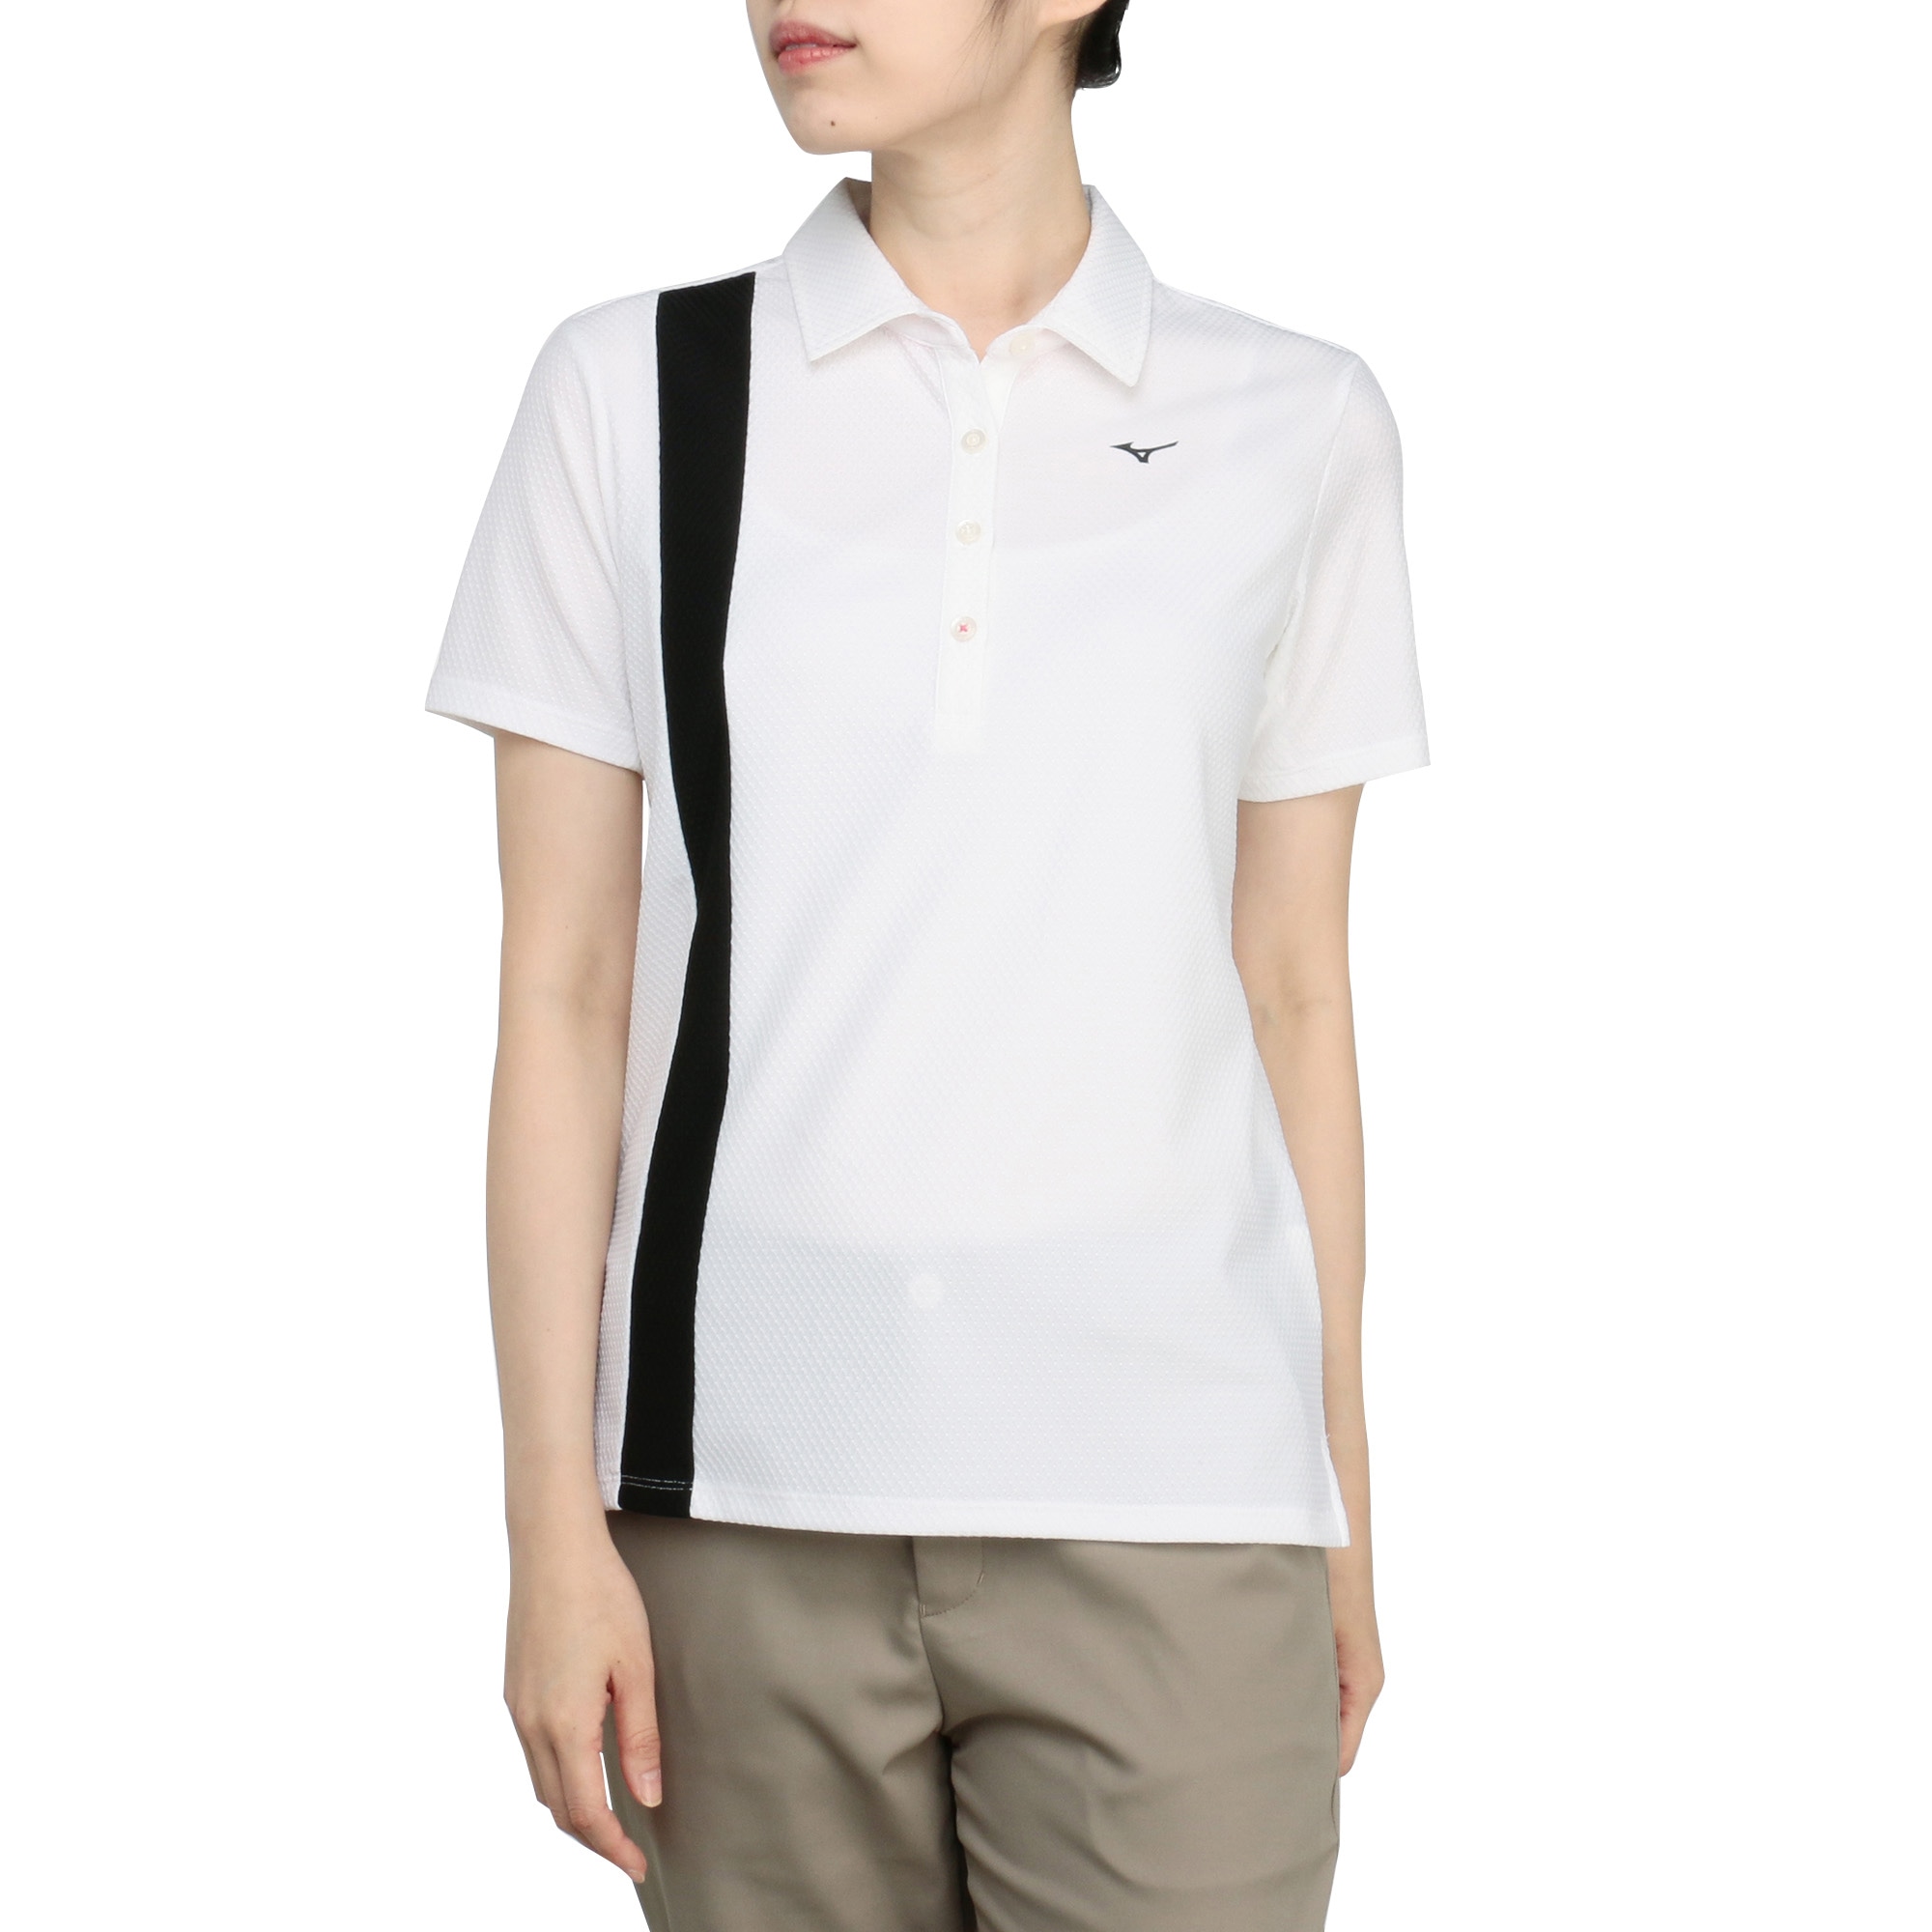 UVサイドライン半袖シャツ[ウィメンズ]|E2MAA201|半袖シャツ|ゴルフ